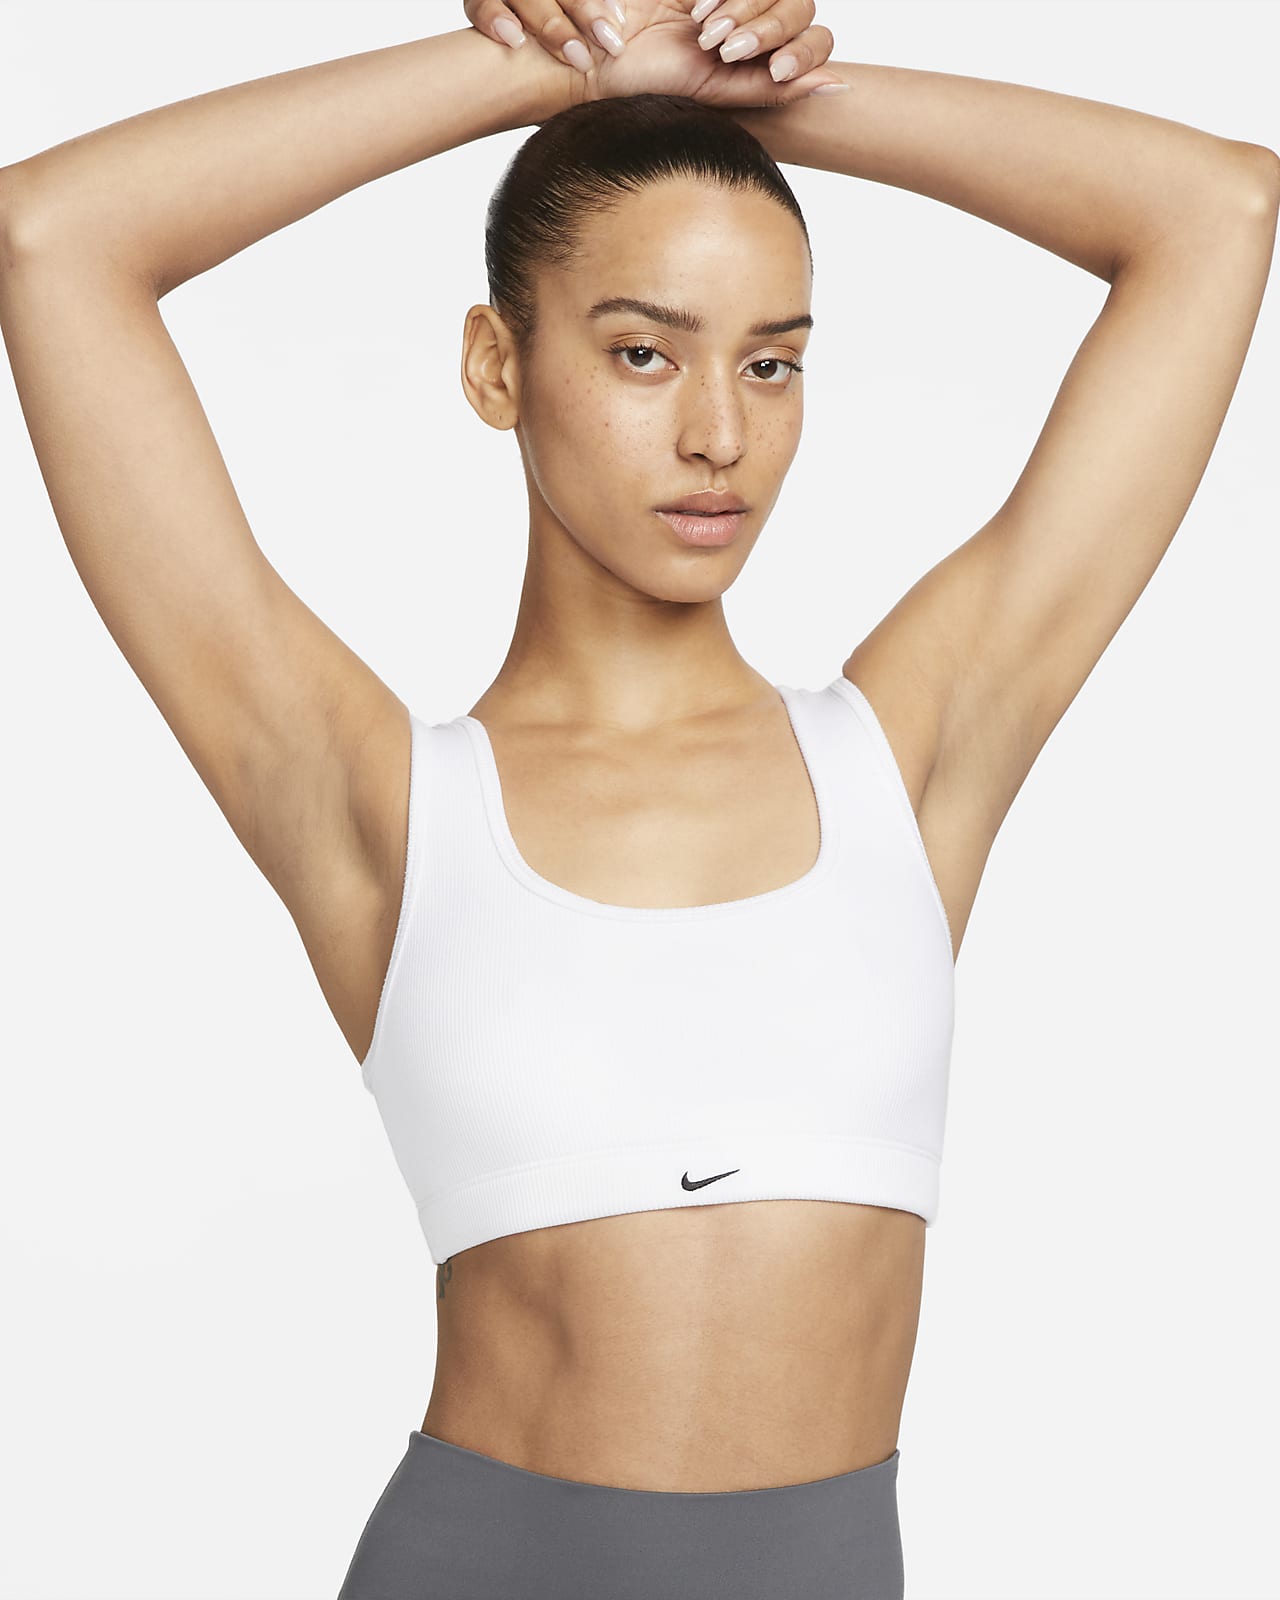 Nike Sport Girls' Bra White